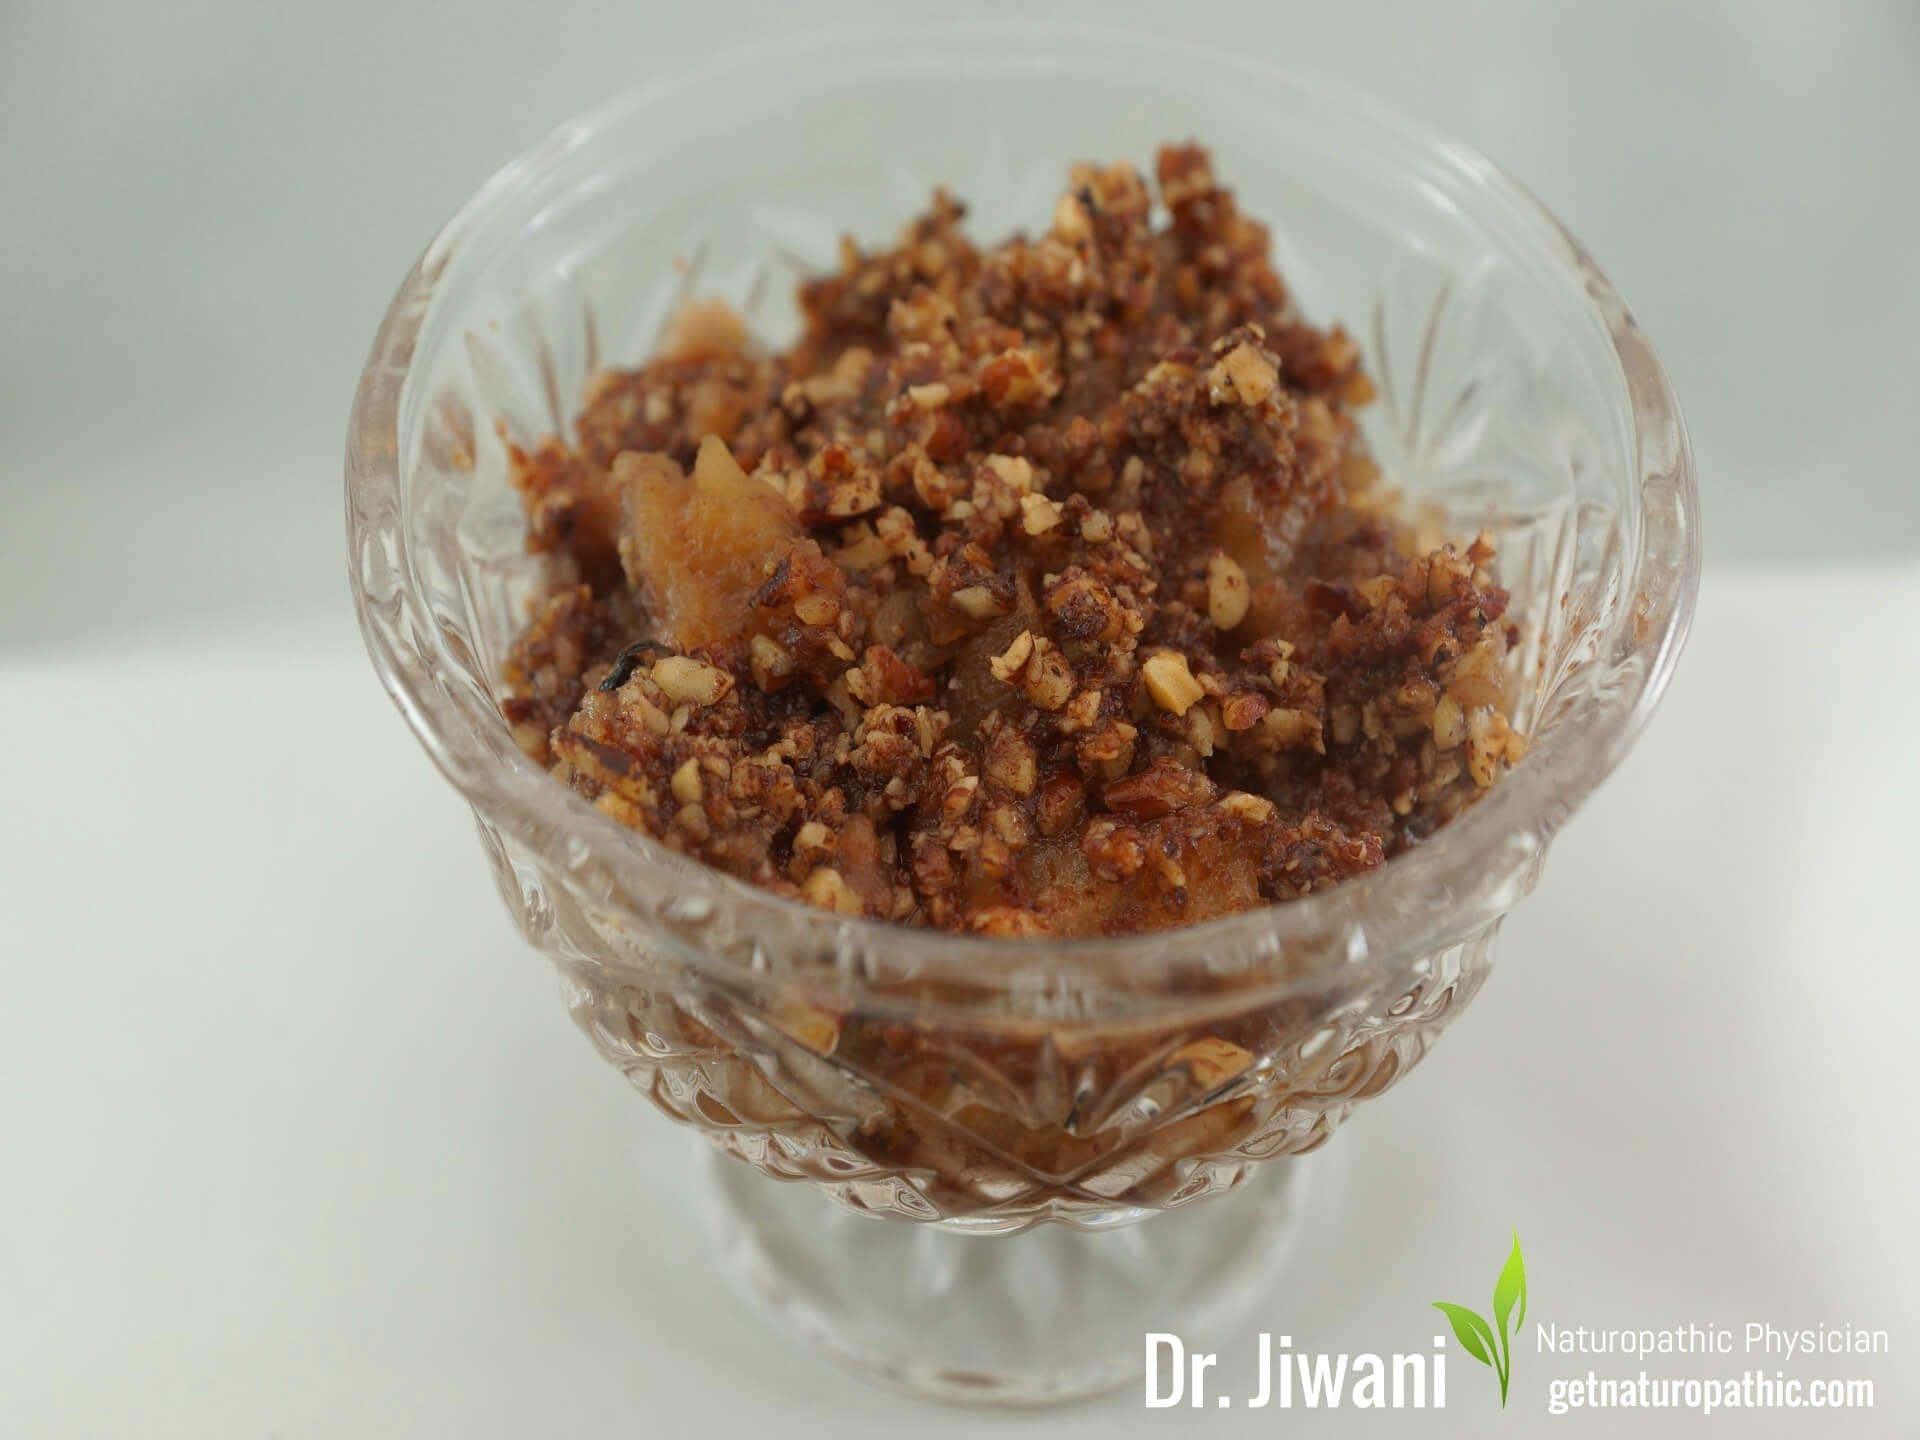 Dr. Jiwani's Oat-Free Apple Crisp: Low Carb, Gluten-Free, Egg-Free, Dairy-Free, Soy-Free, Corn-Free, Ideal For Vegan, Paleo, Keto, Diabetic & Candida Diets | Dr. Jiwani's Naturopathic Nuggets Blog